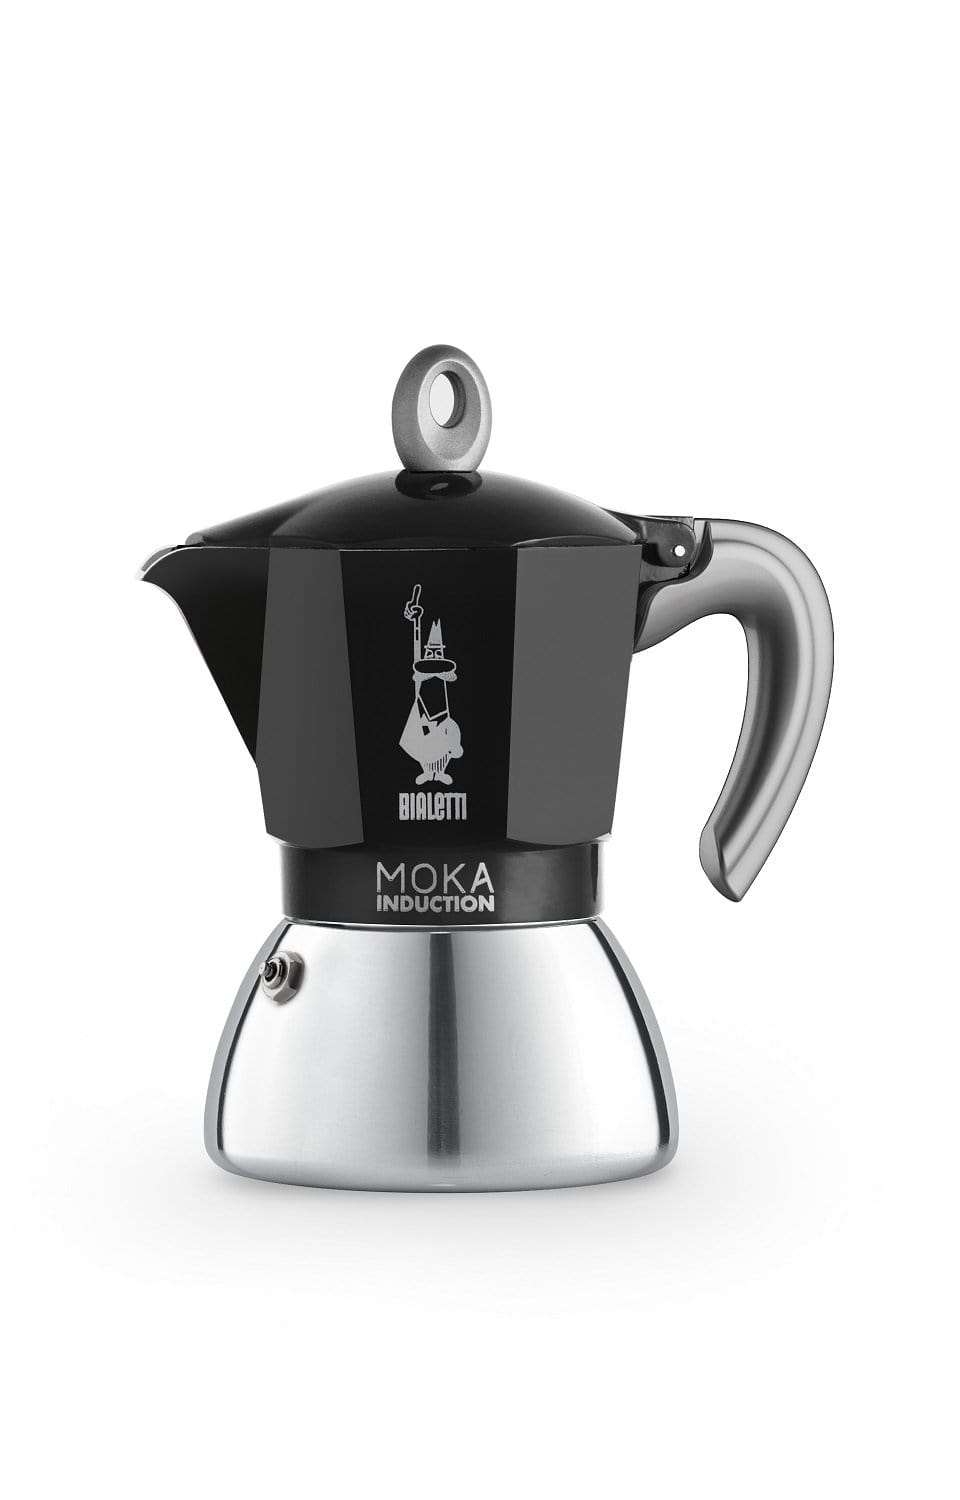 BIALETTI NEW MOKA INDUCTION COFFEE MAKER BLACK 6 CUPS - 6936